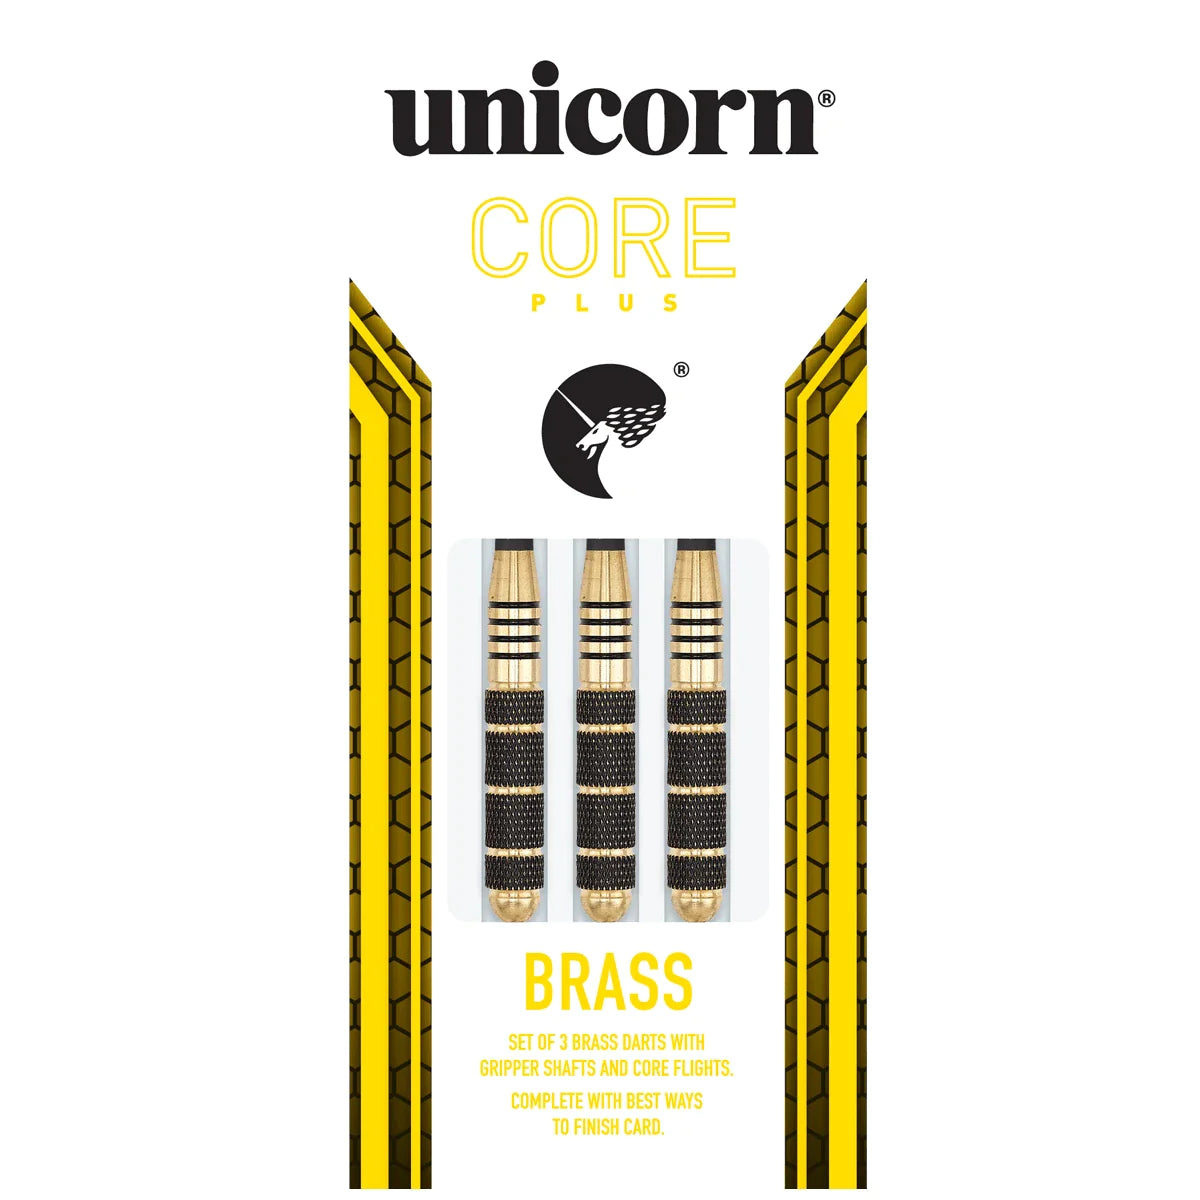 Unicorn Core Plus Brass 25g Darts